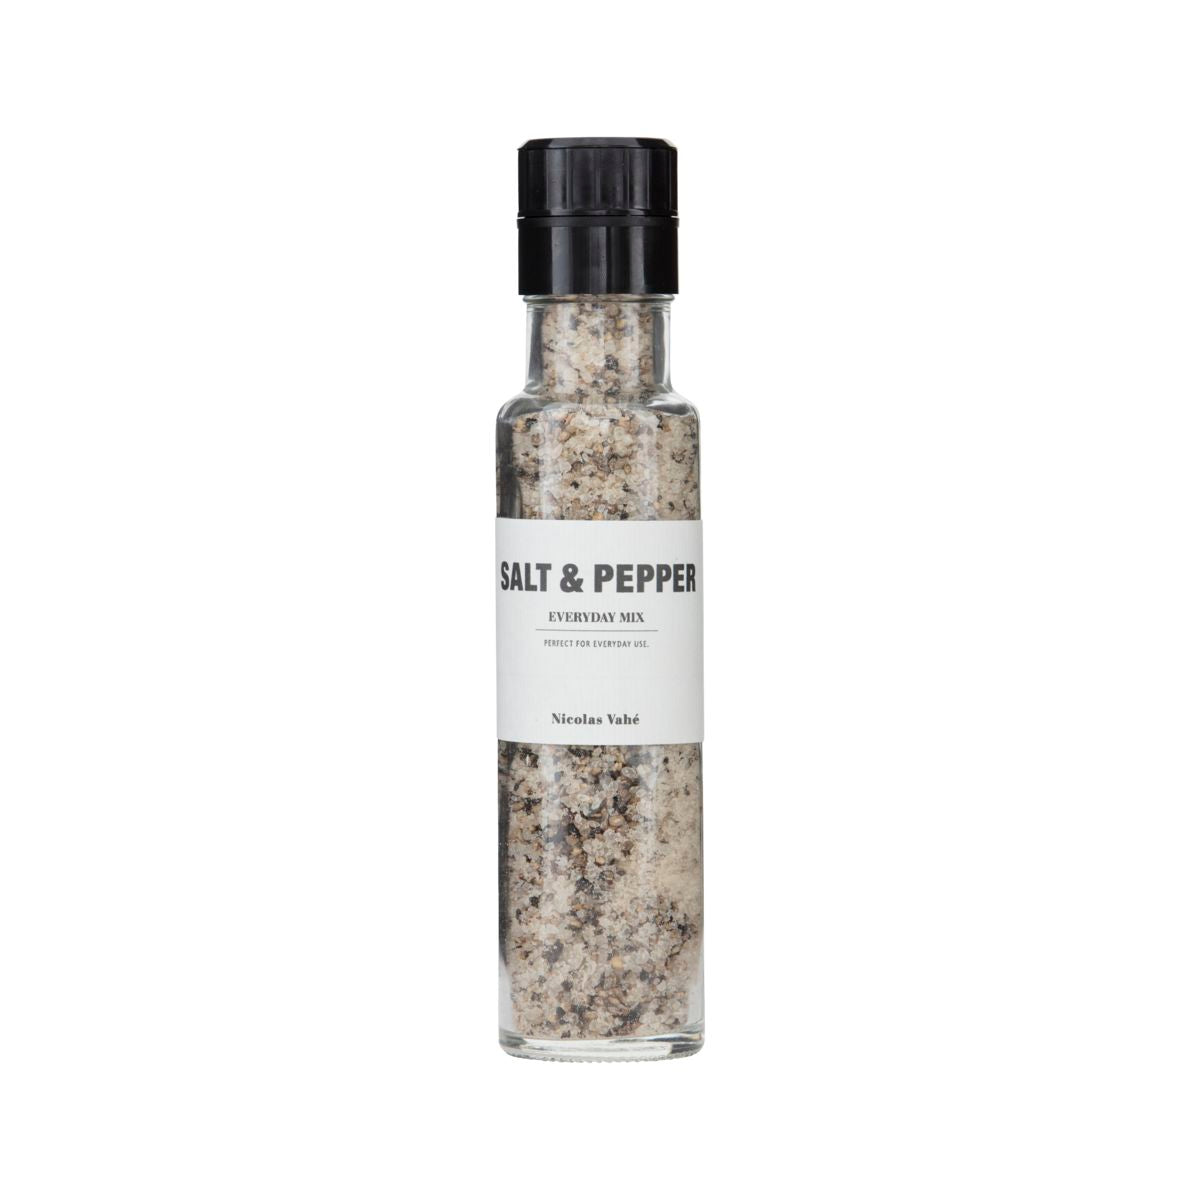 Salt + Pepper Everyday Mix - Nicolas Vahé -bluecashew kitchen homestead